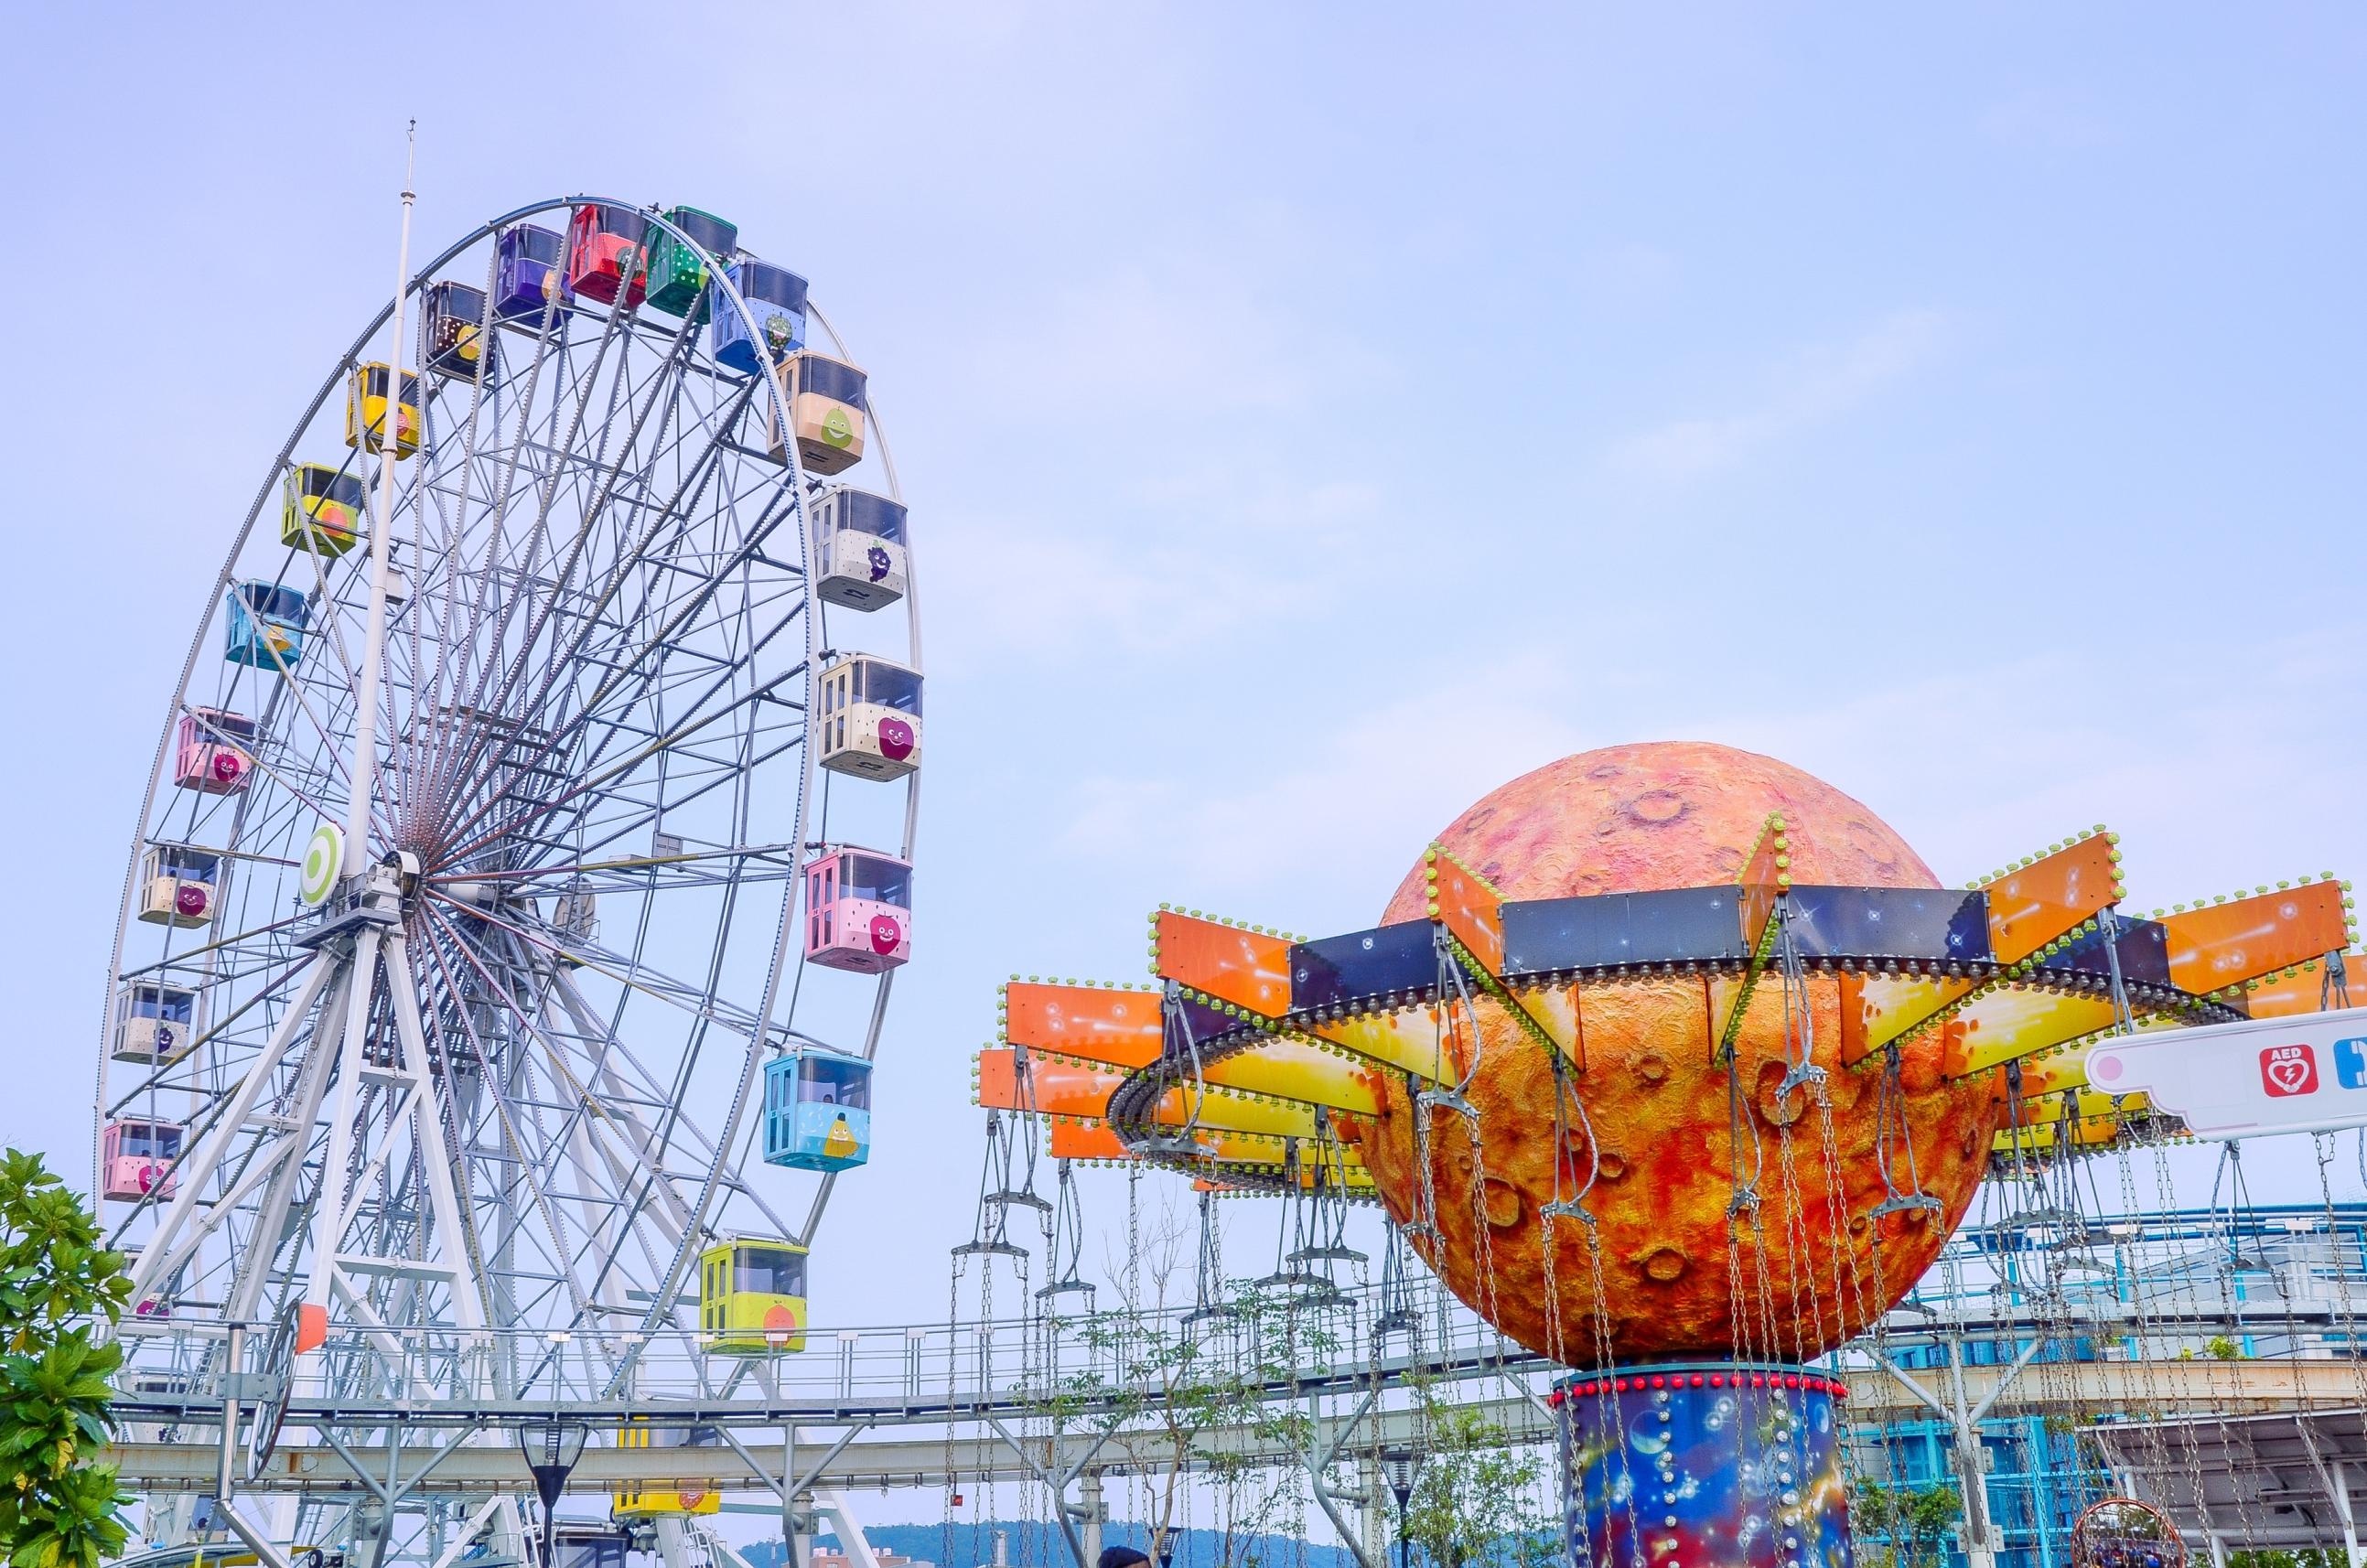 Amusement Park: Taipei Children's funfair, Attractions, Ferris wheel. 2590x1720 HD Wallpaper.